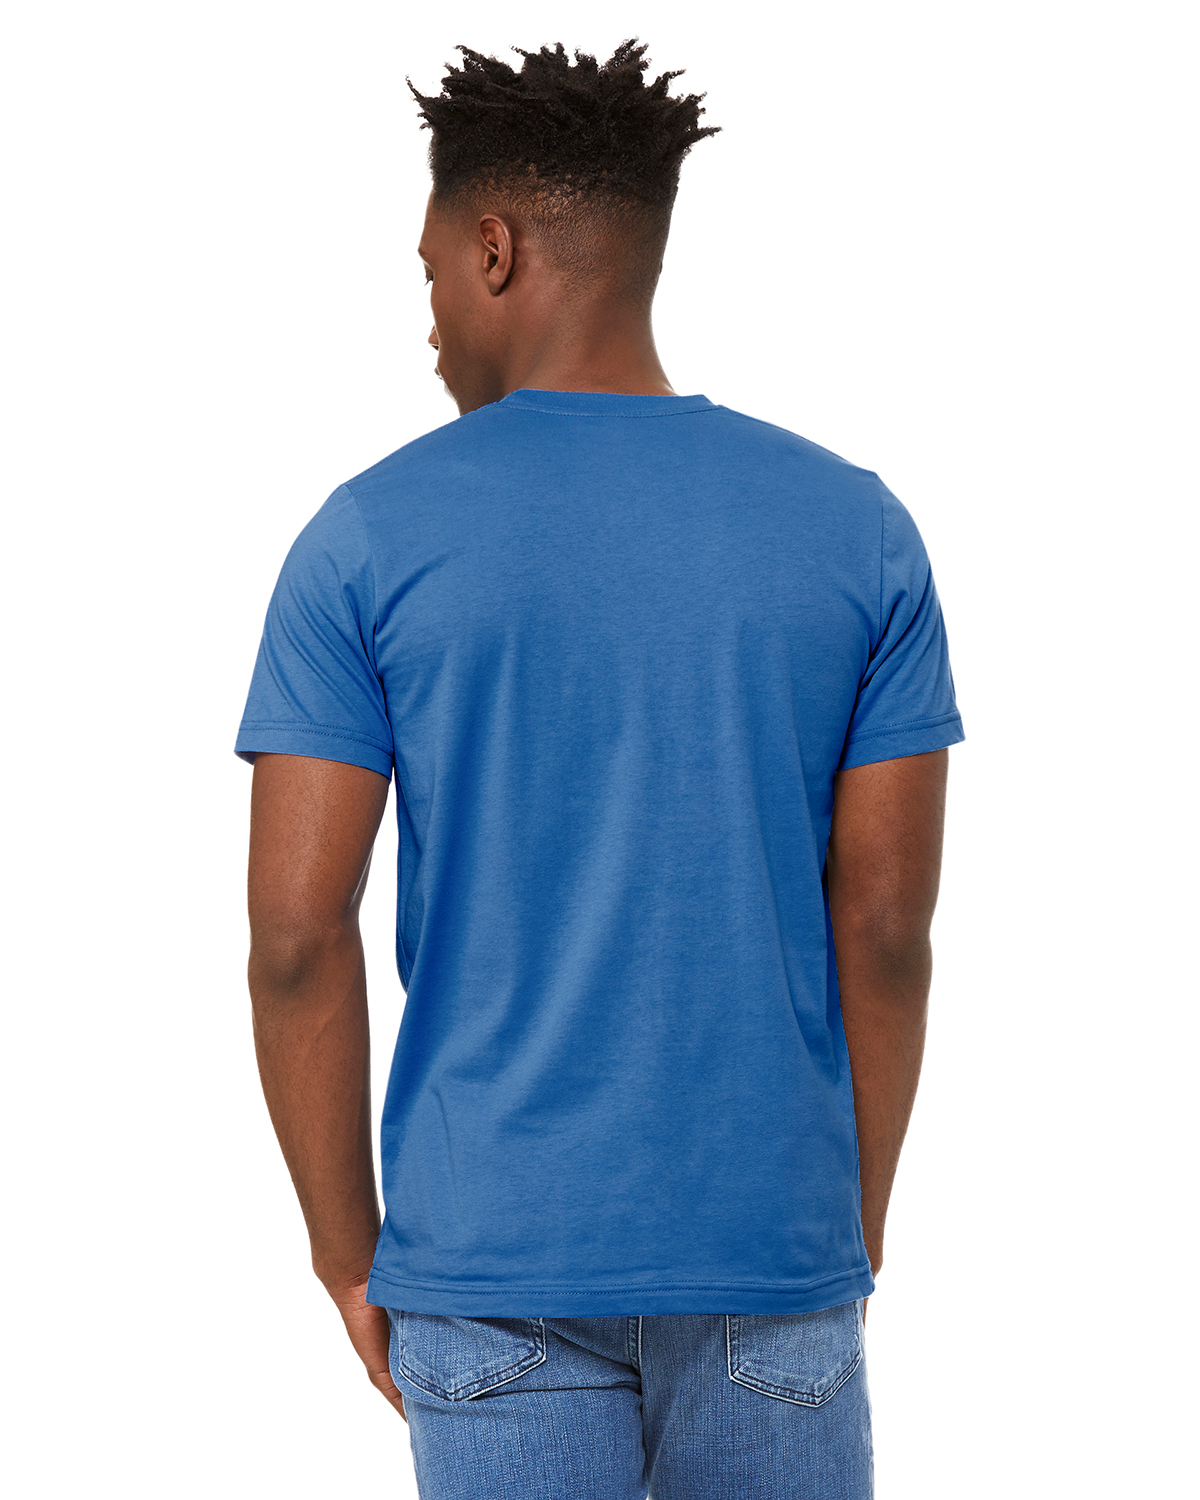 Columbia Men's Turquoise/Blue Print T-Shirt 3XL 4XL 5XL  New  FREE SHIPPING 